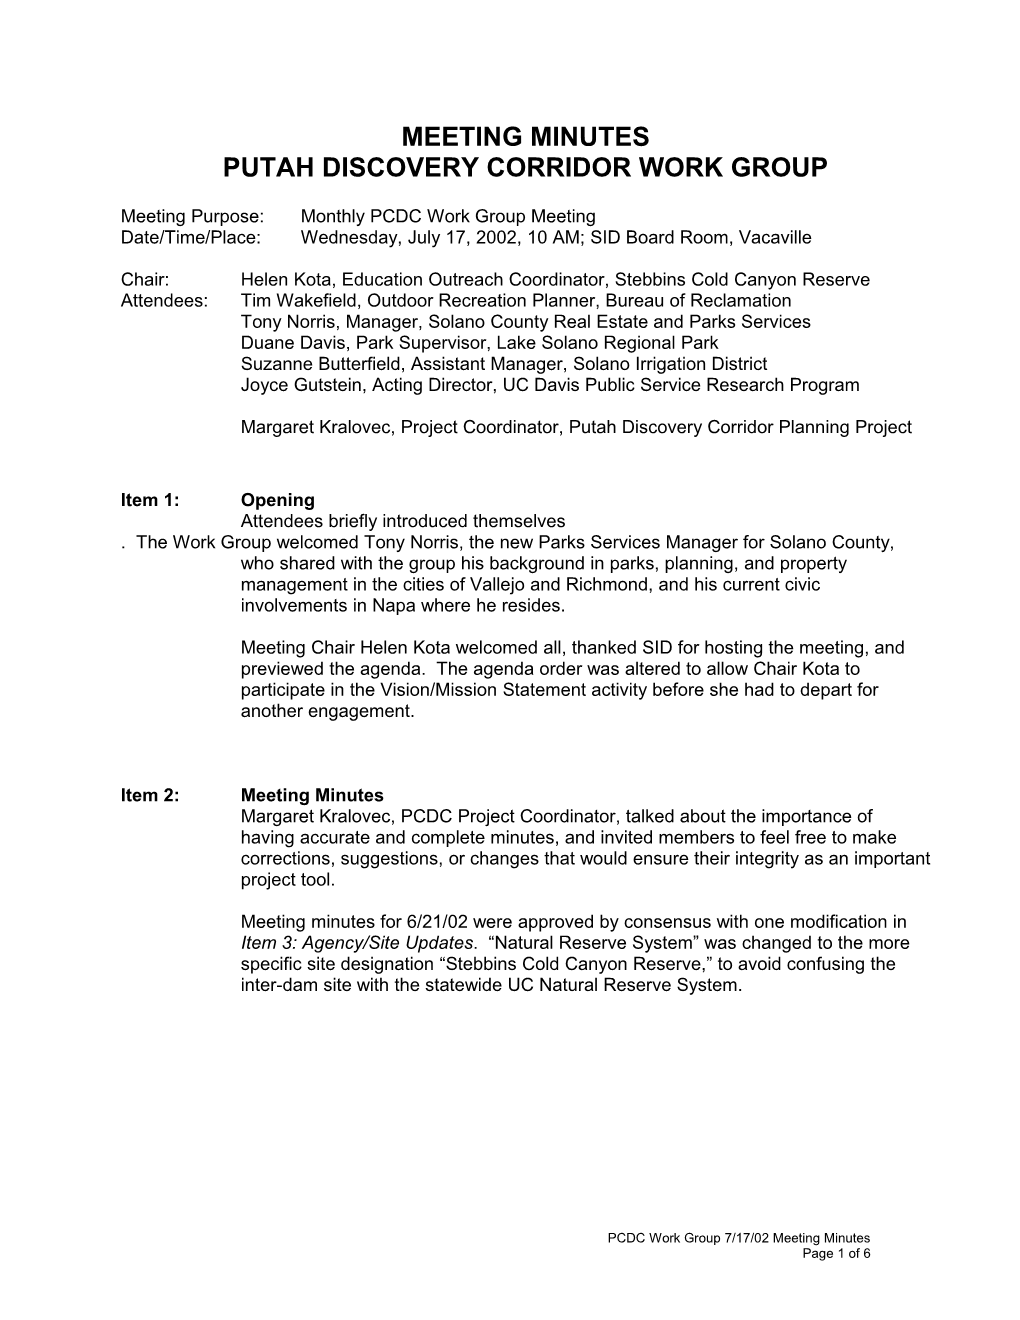 Putah Discovery Corridor Work Group